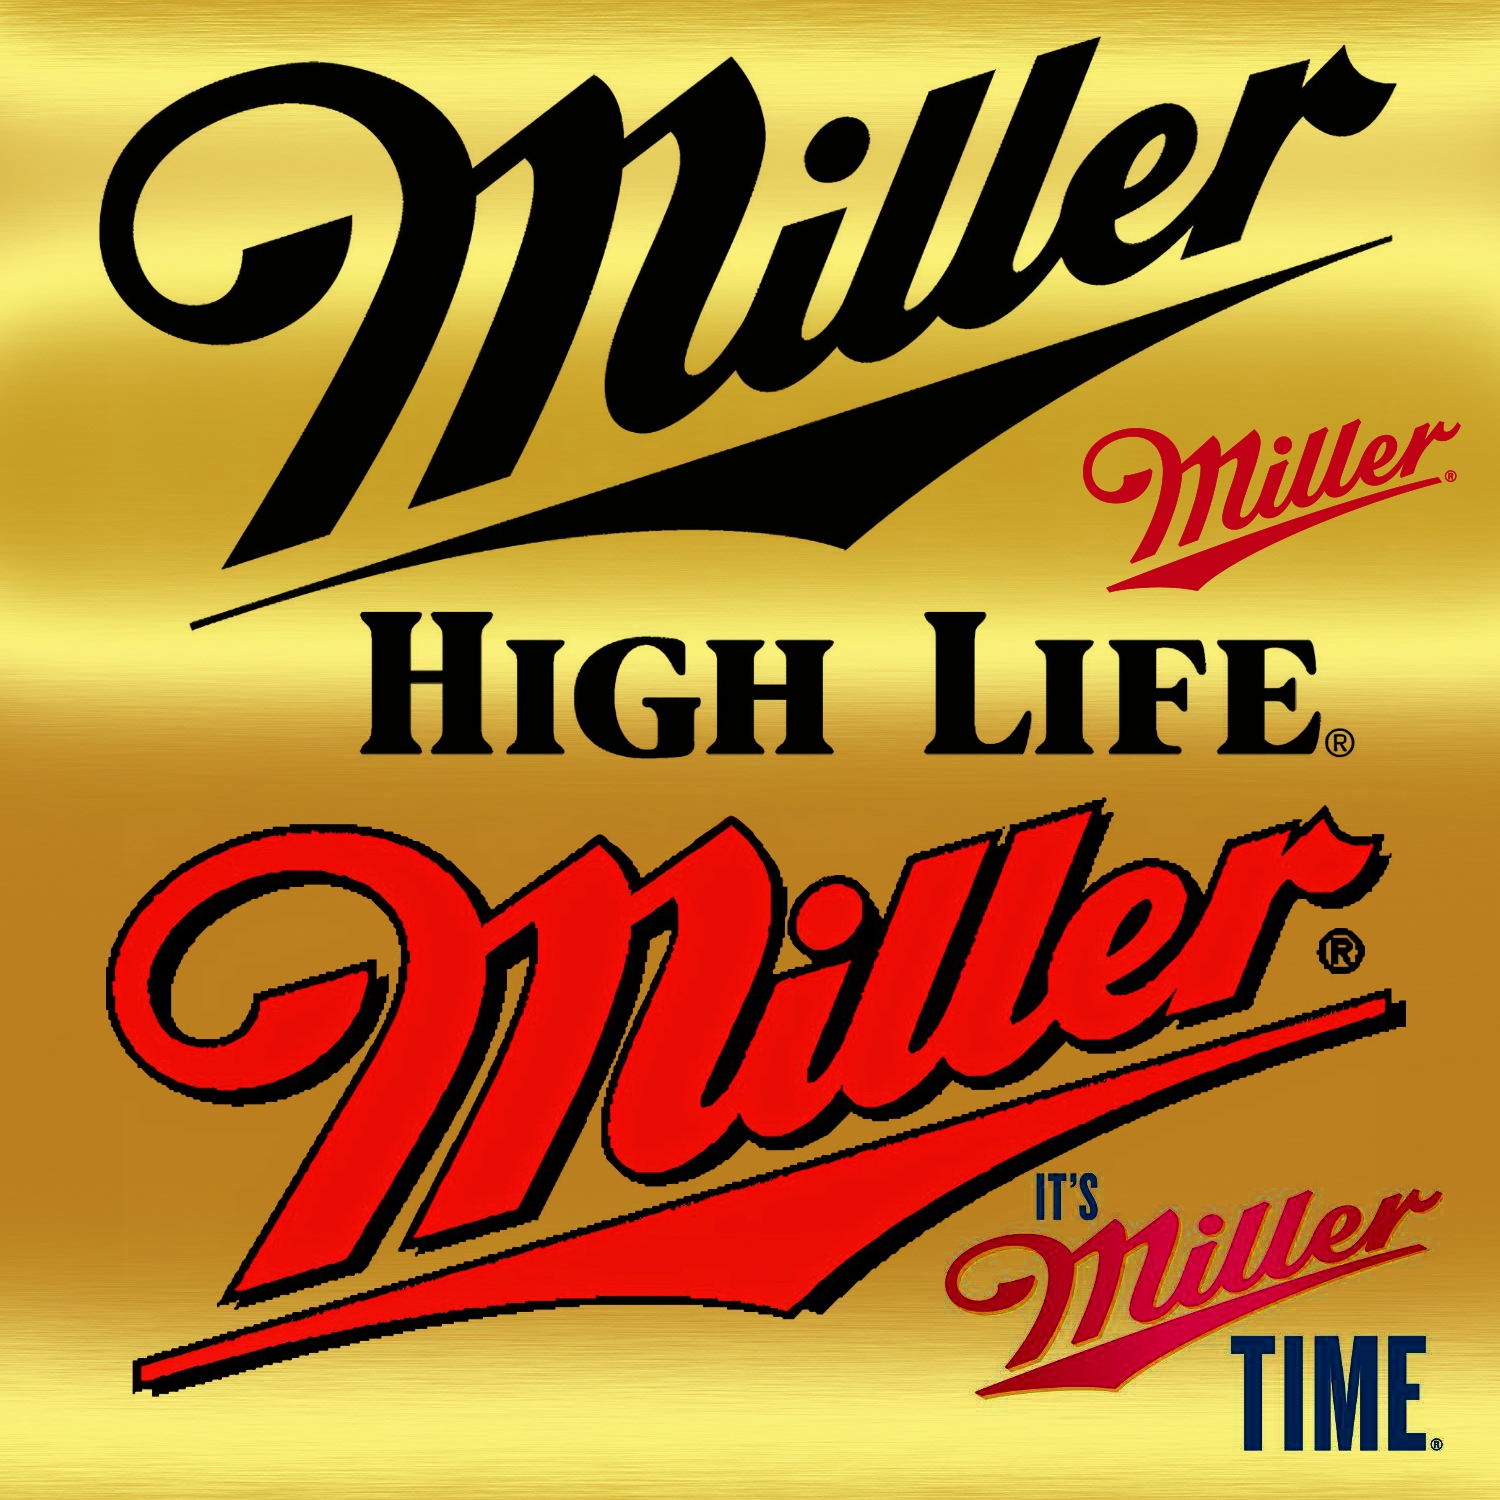 Miller logos.jpg